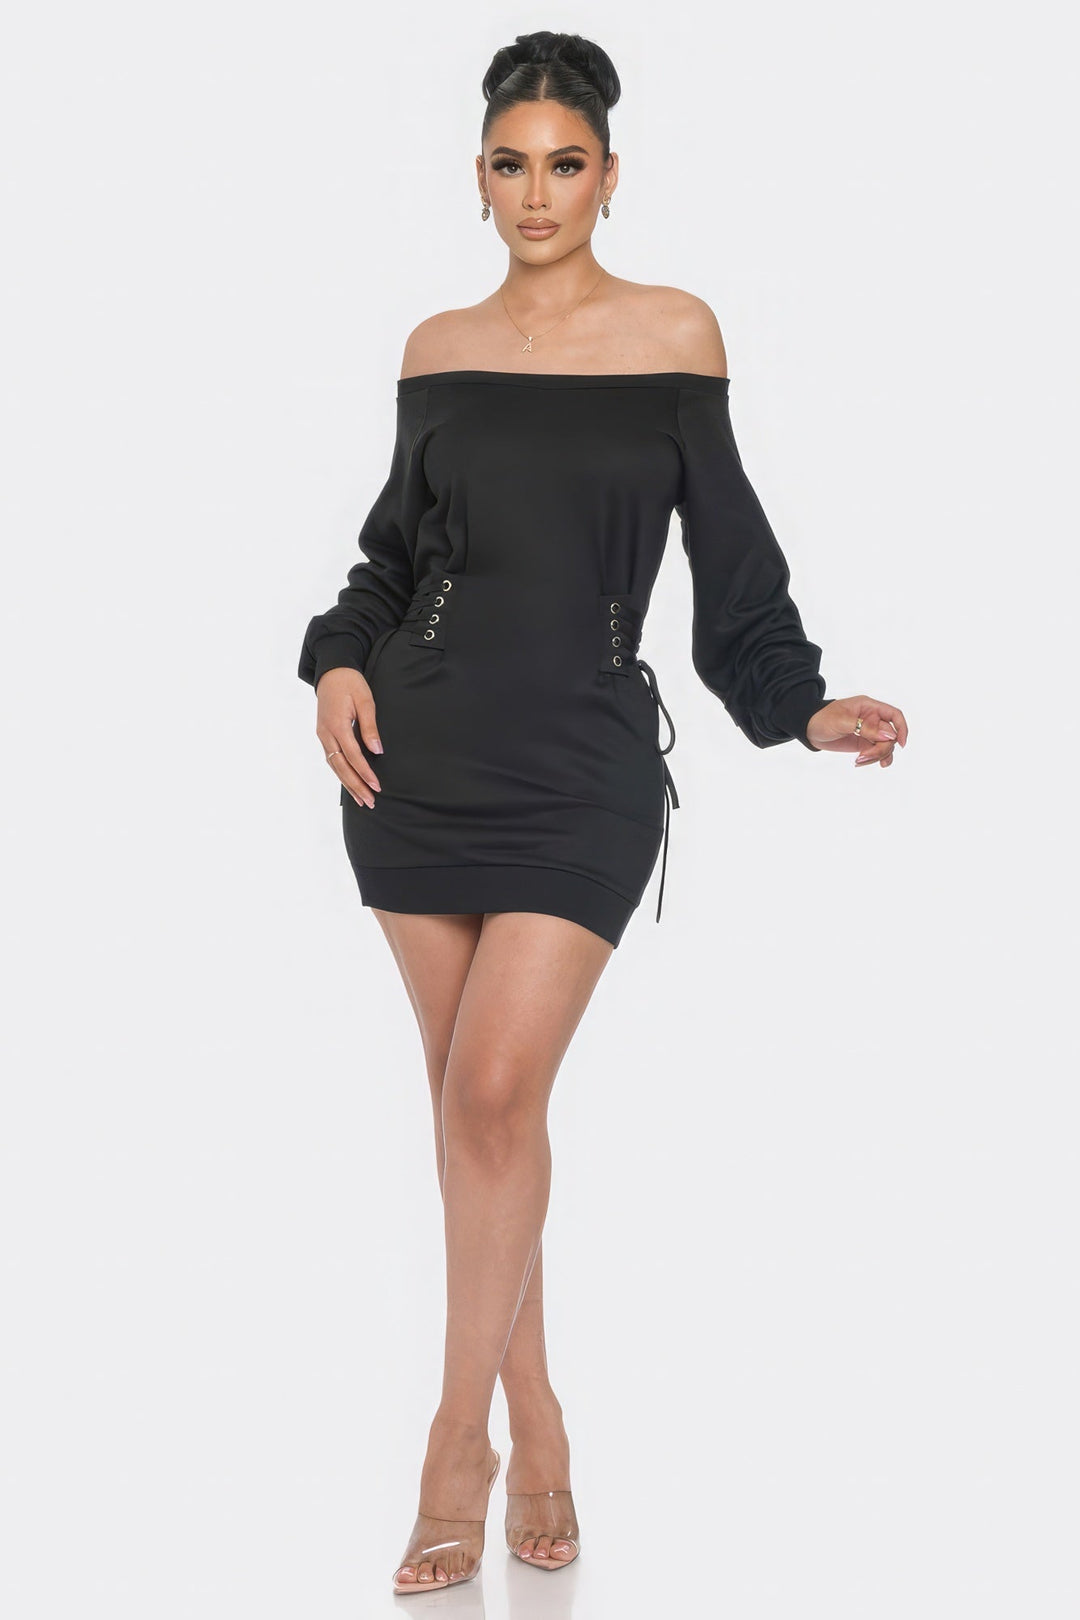 The802Gypsy  Dresses ❤GYPSY LOVE-Off Shoulder Mini Dress